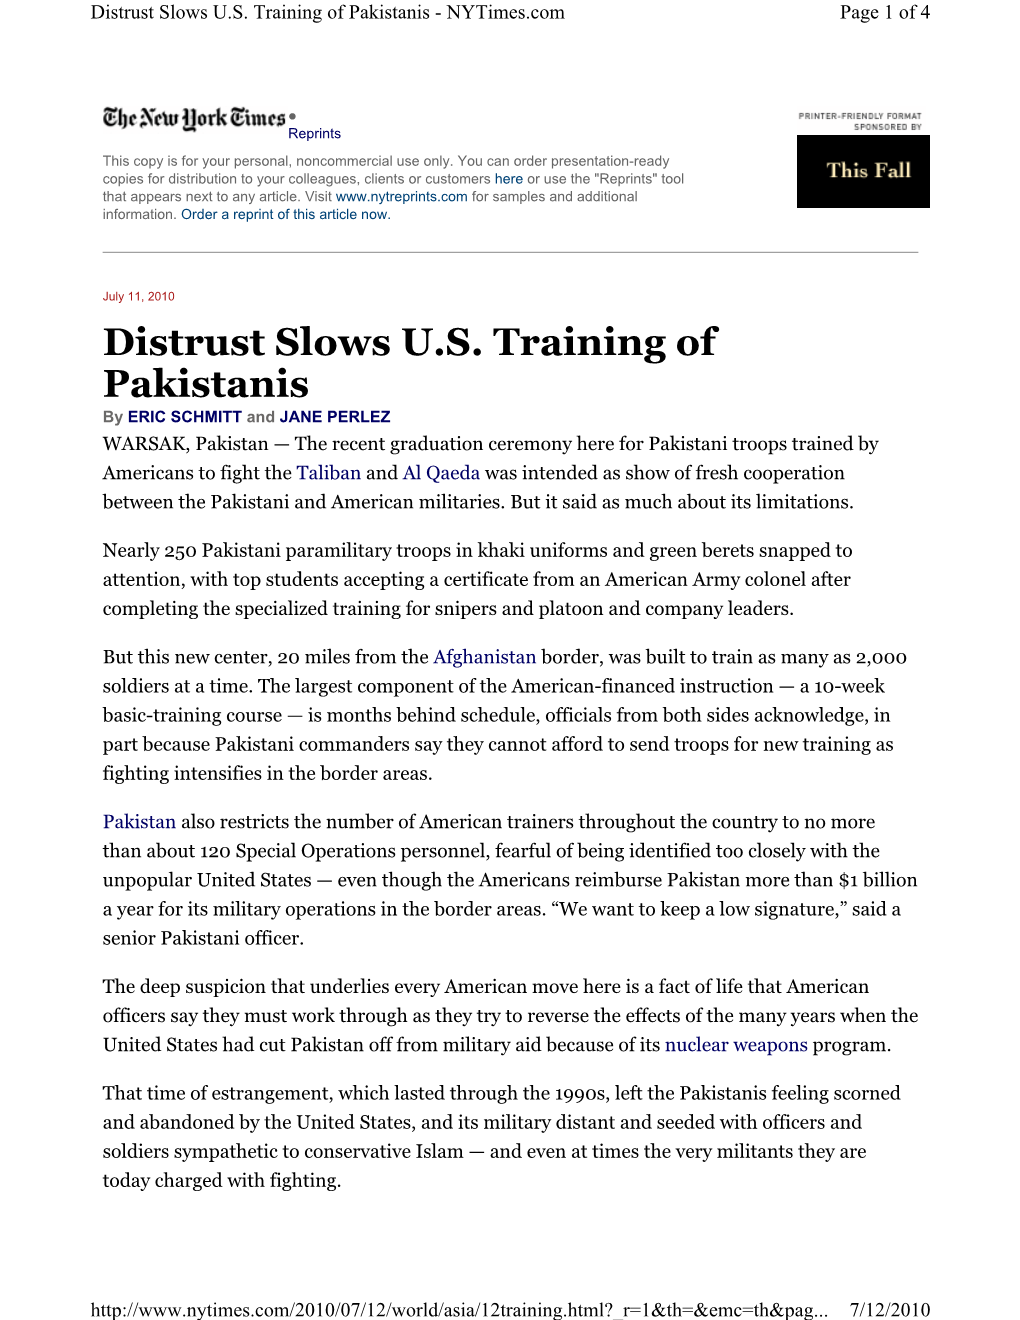 Distrust Slows U.S. Training of Pakistanis - Nytimes.Com Page 1 of 4